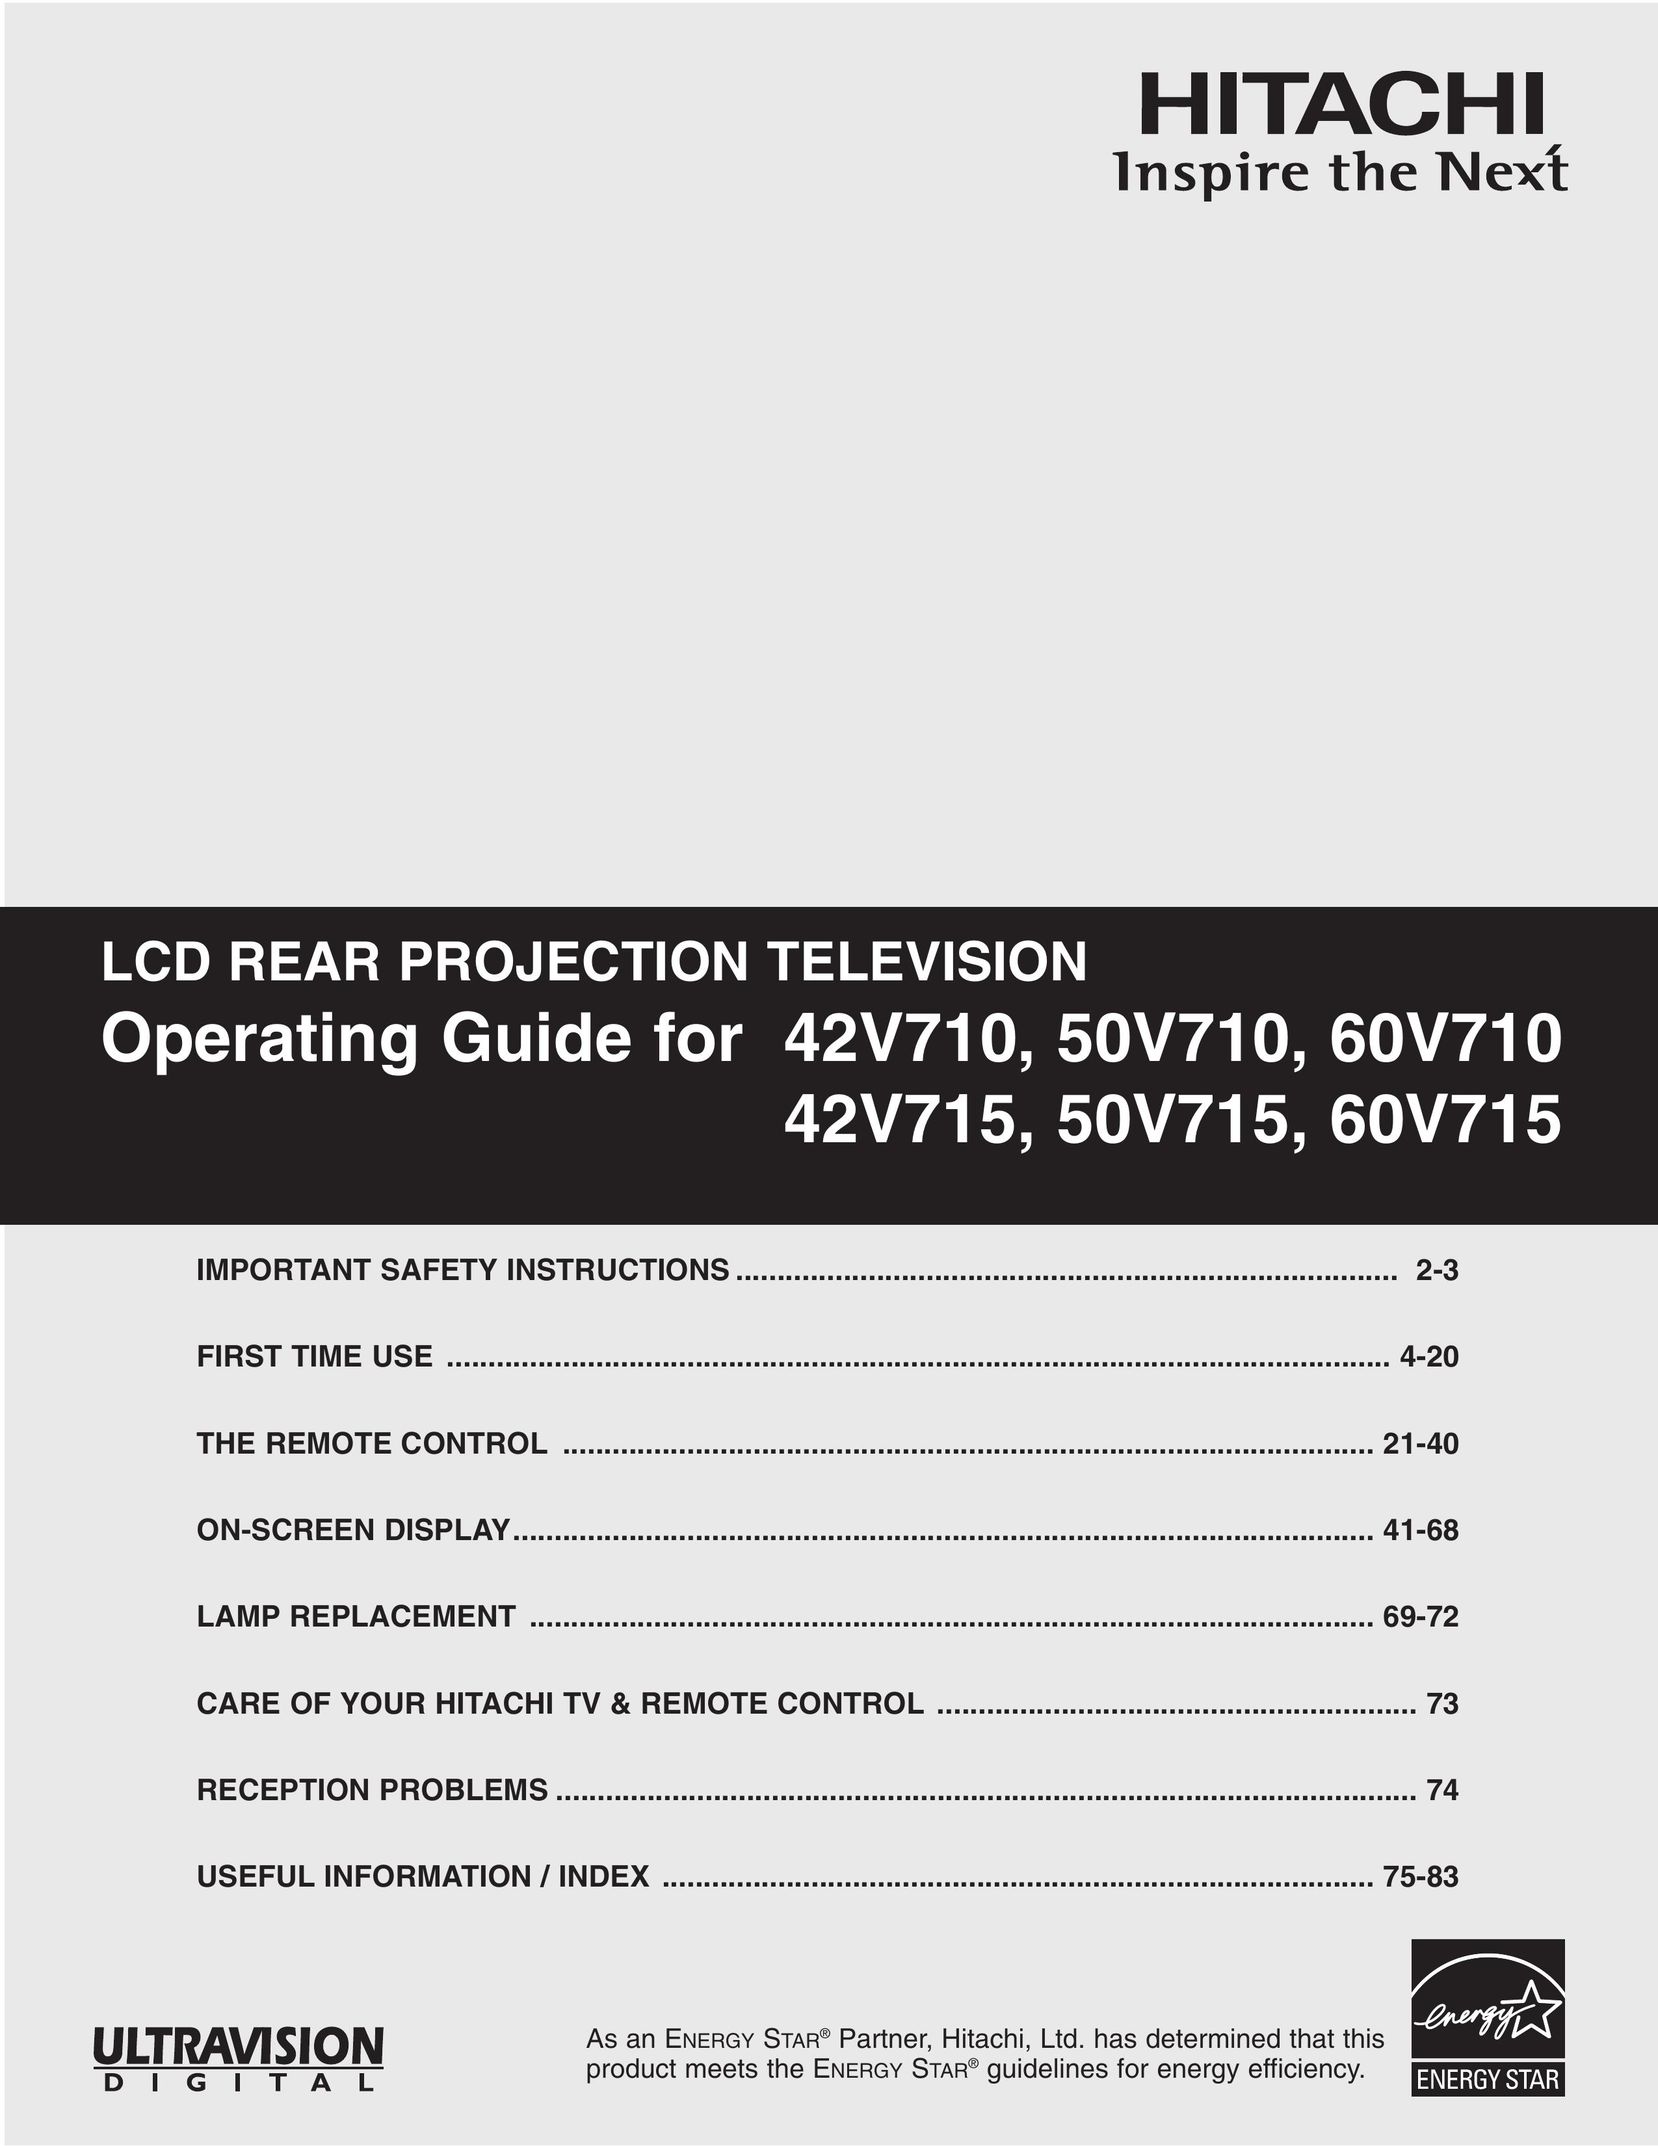 Hitachi 42V715 Projection Television User Manual